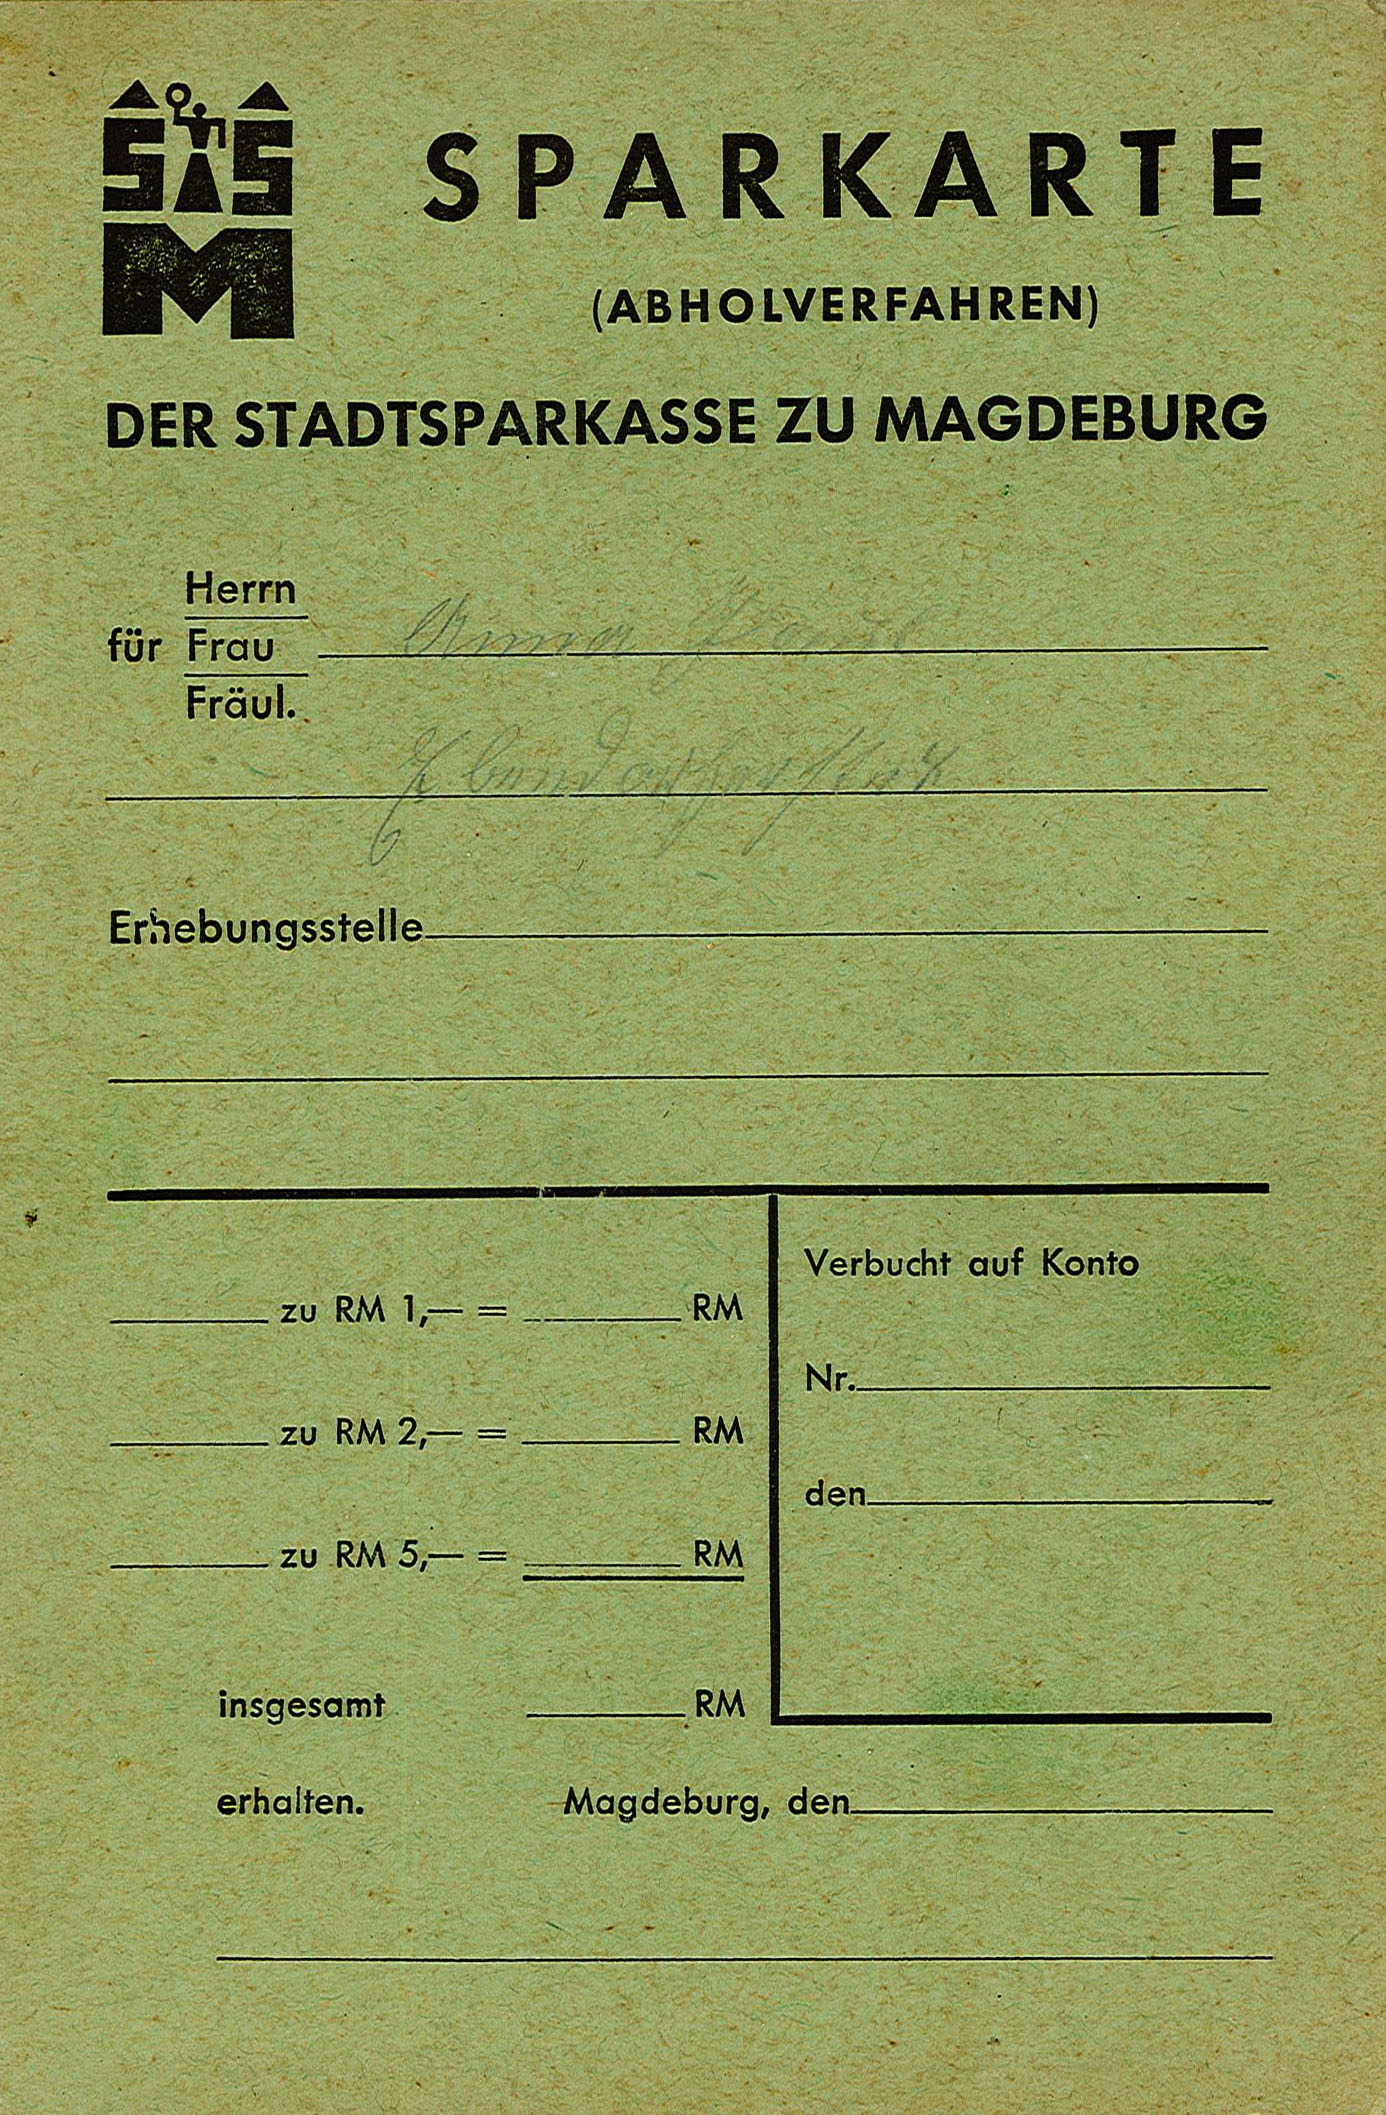 Sparkarte der Stadtsparkasse Magdeburg, Inhaber Anna Paul, 1943-1944 (Museum Wolmirstedt RR-F)